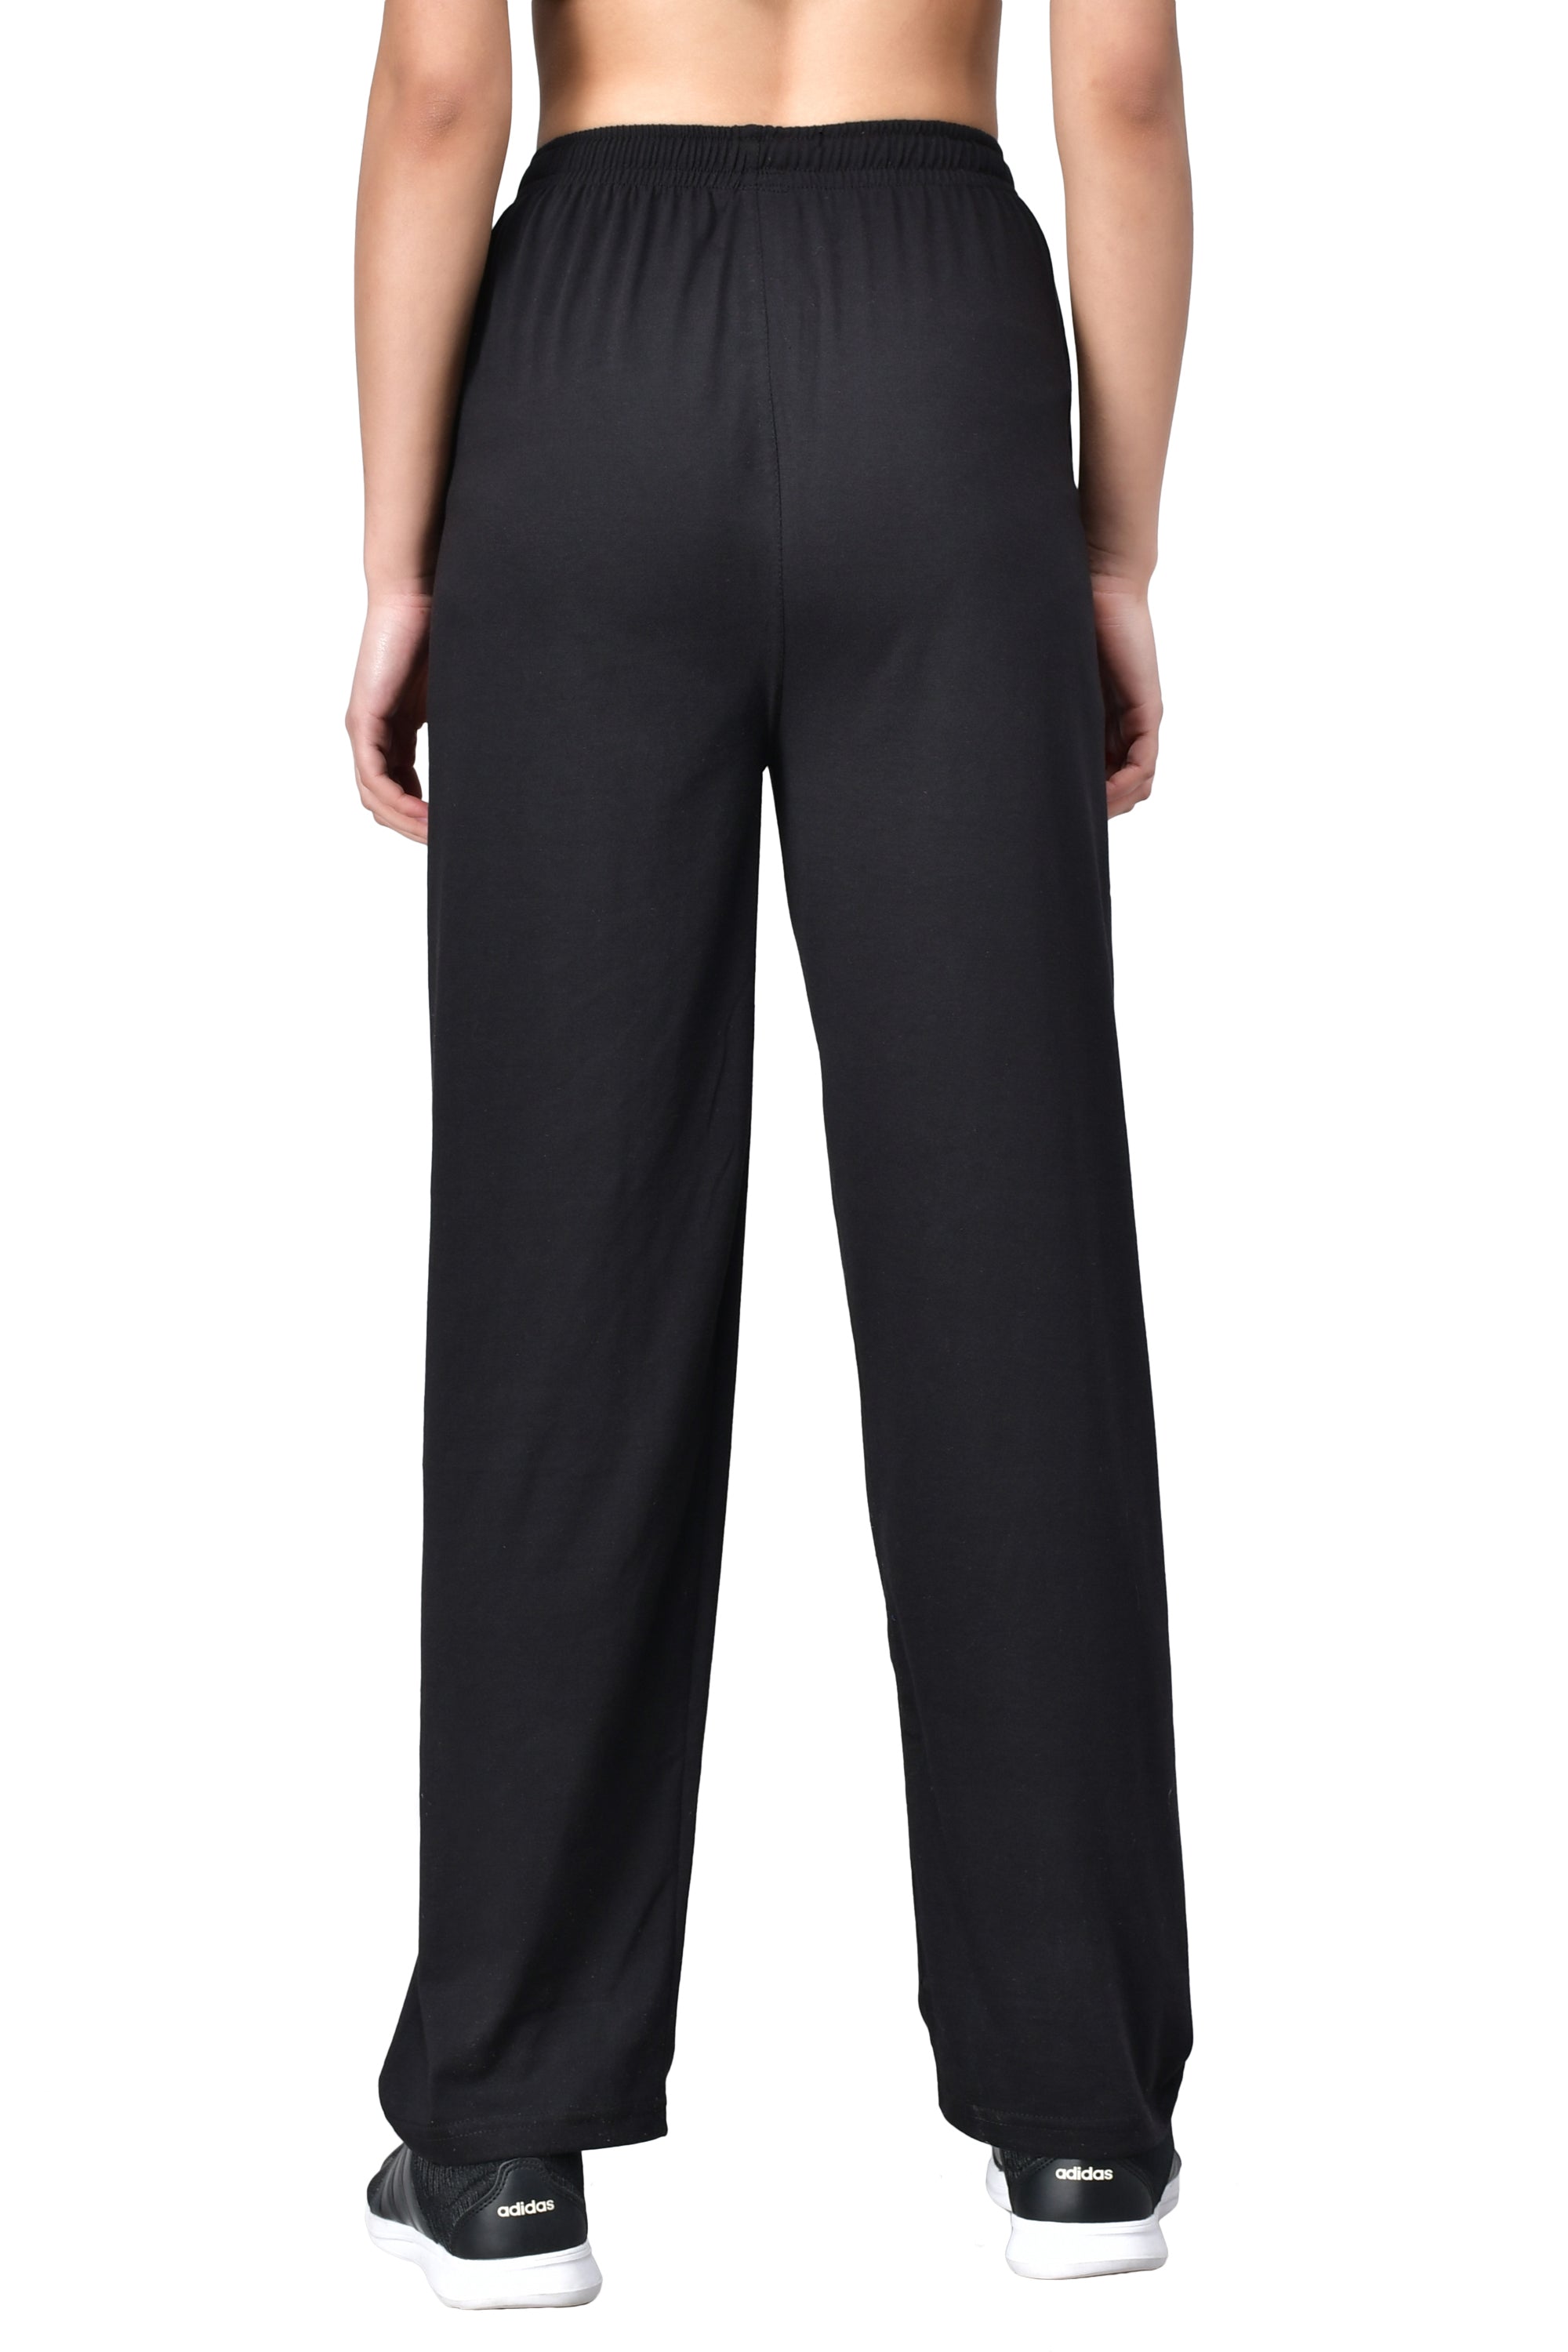 Buy Black Track Pants for Women by FFLIRTYGO Online | Ajio.com